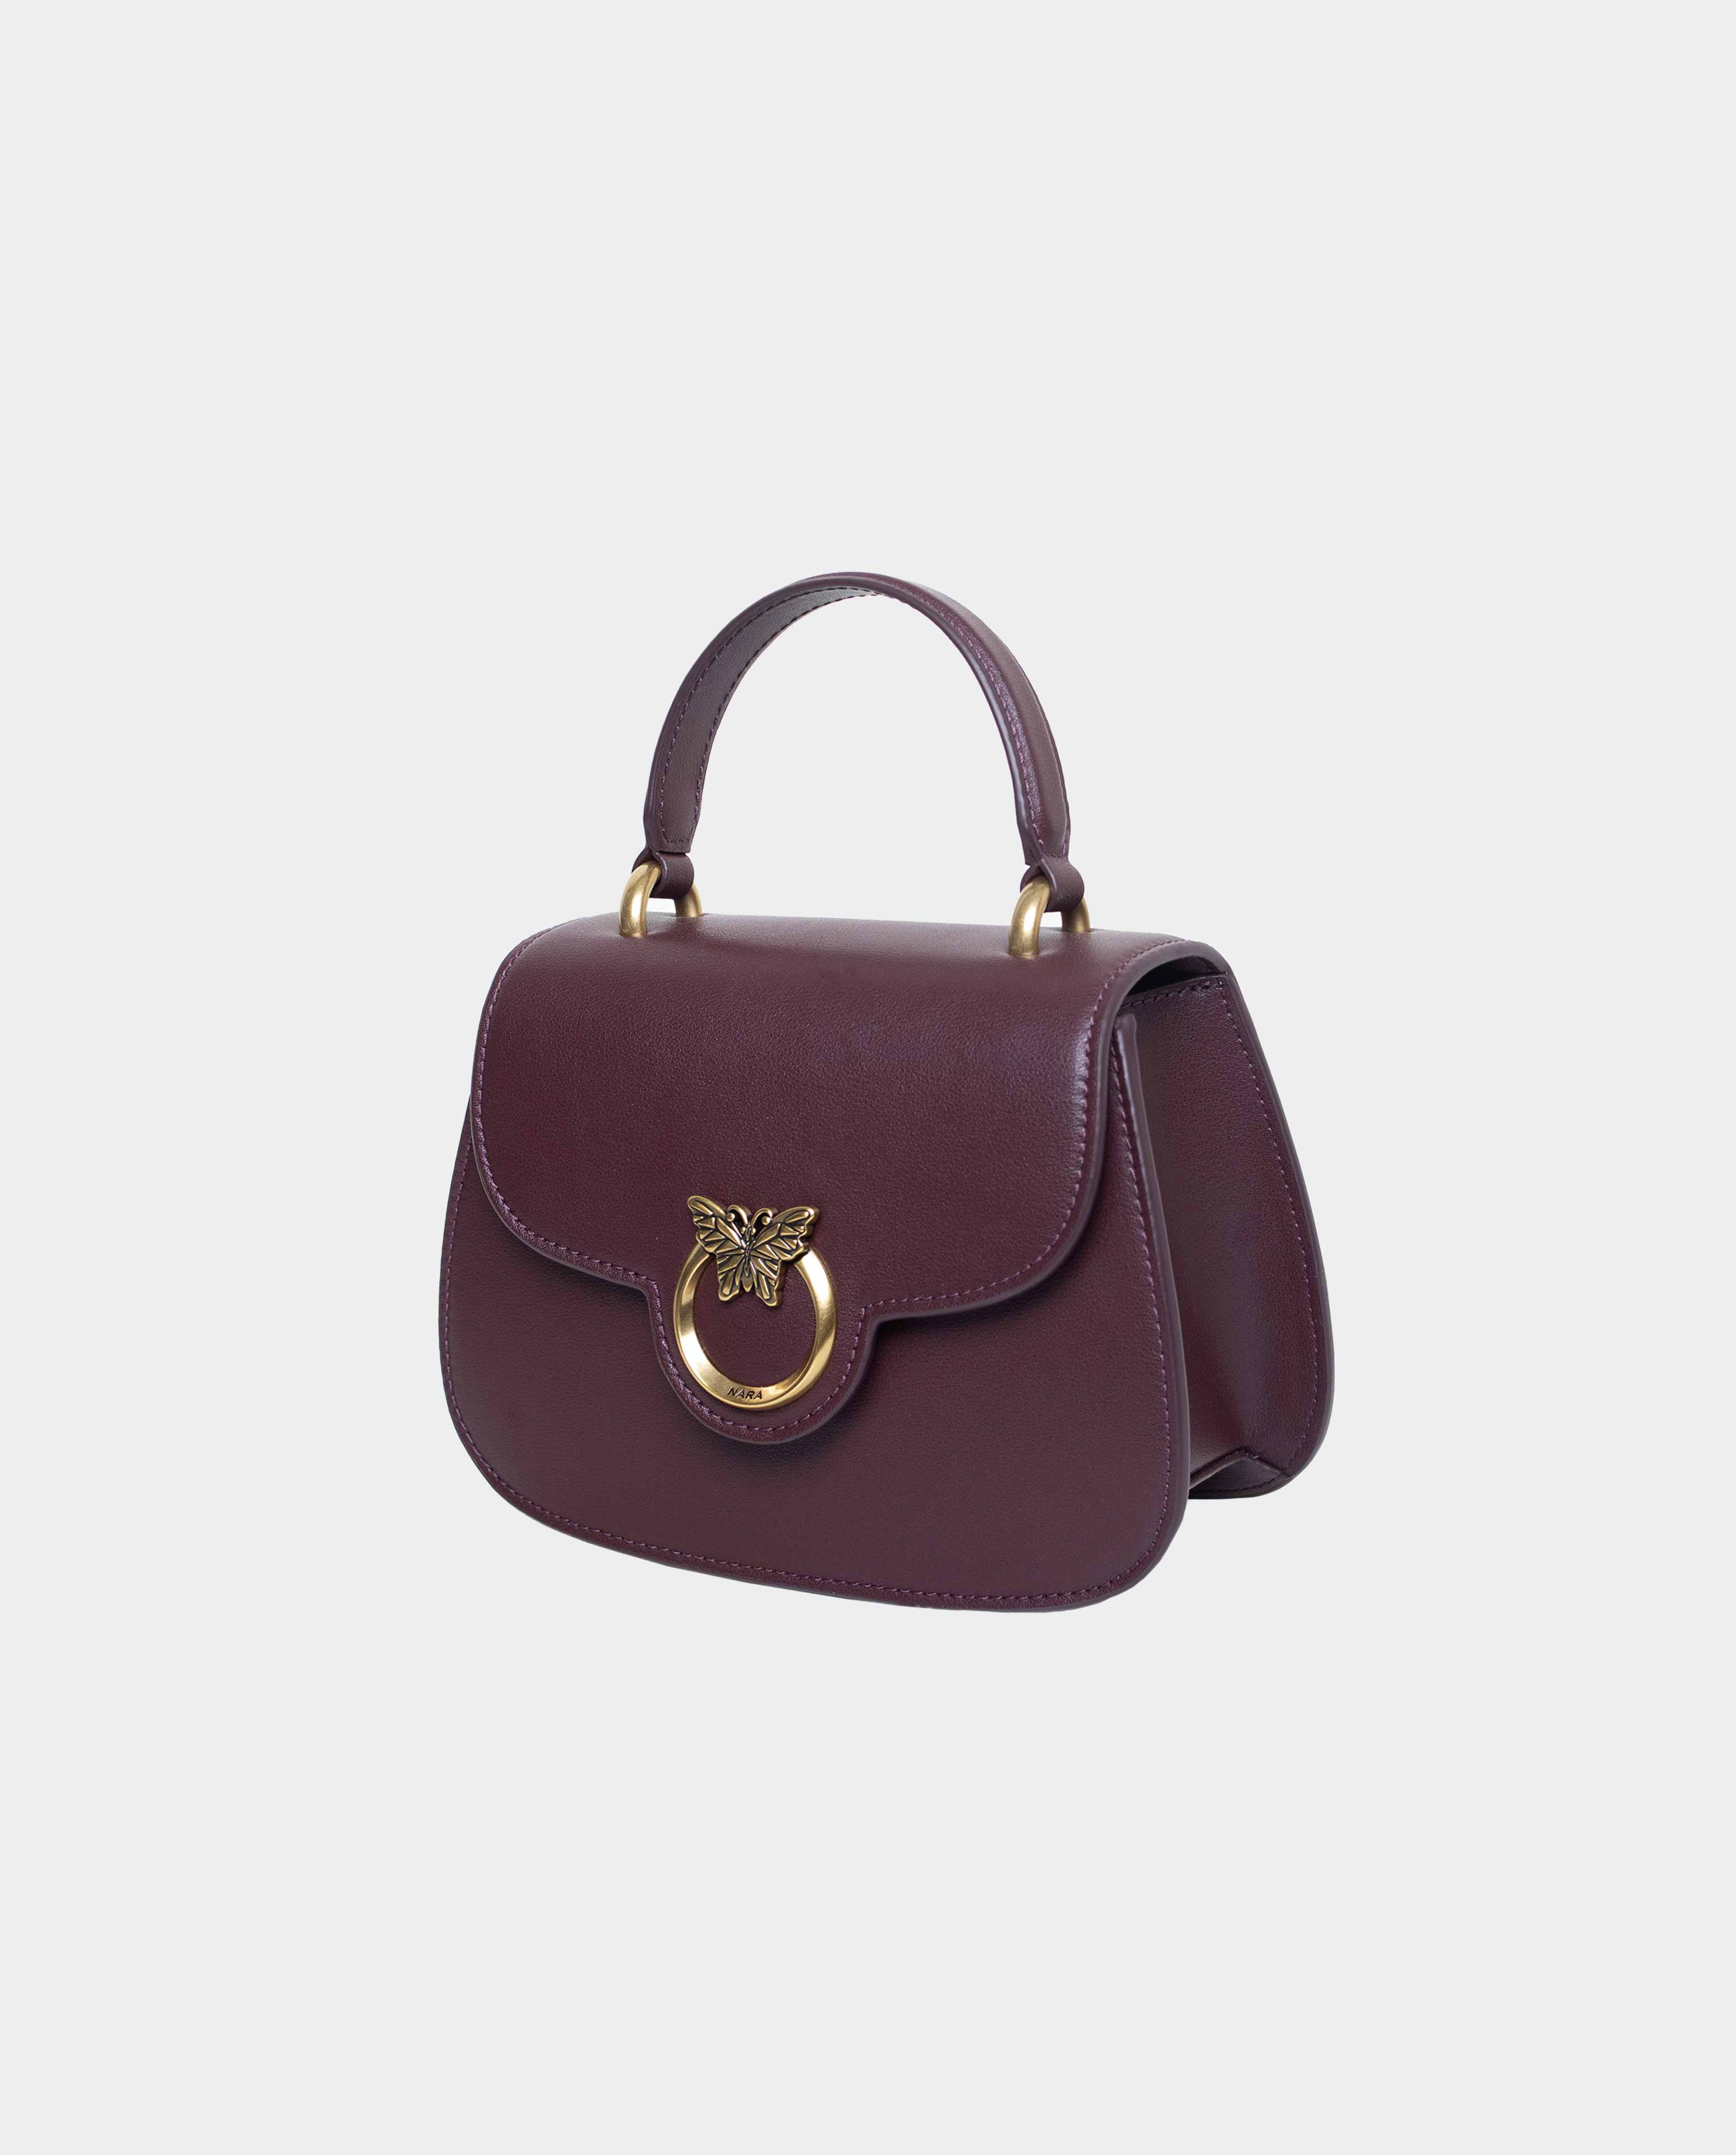 Brown mini handbag made of leather. - Brown - NaraMilano